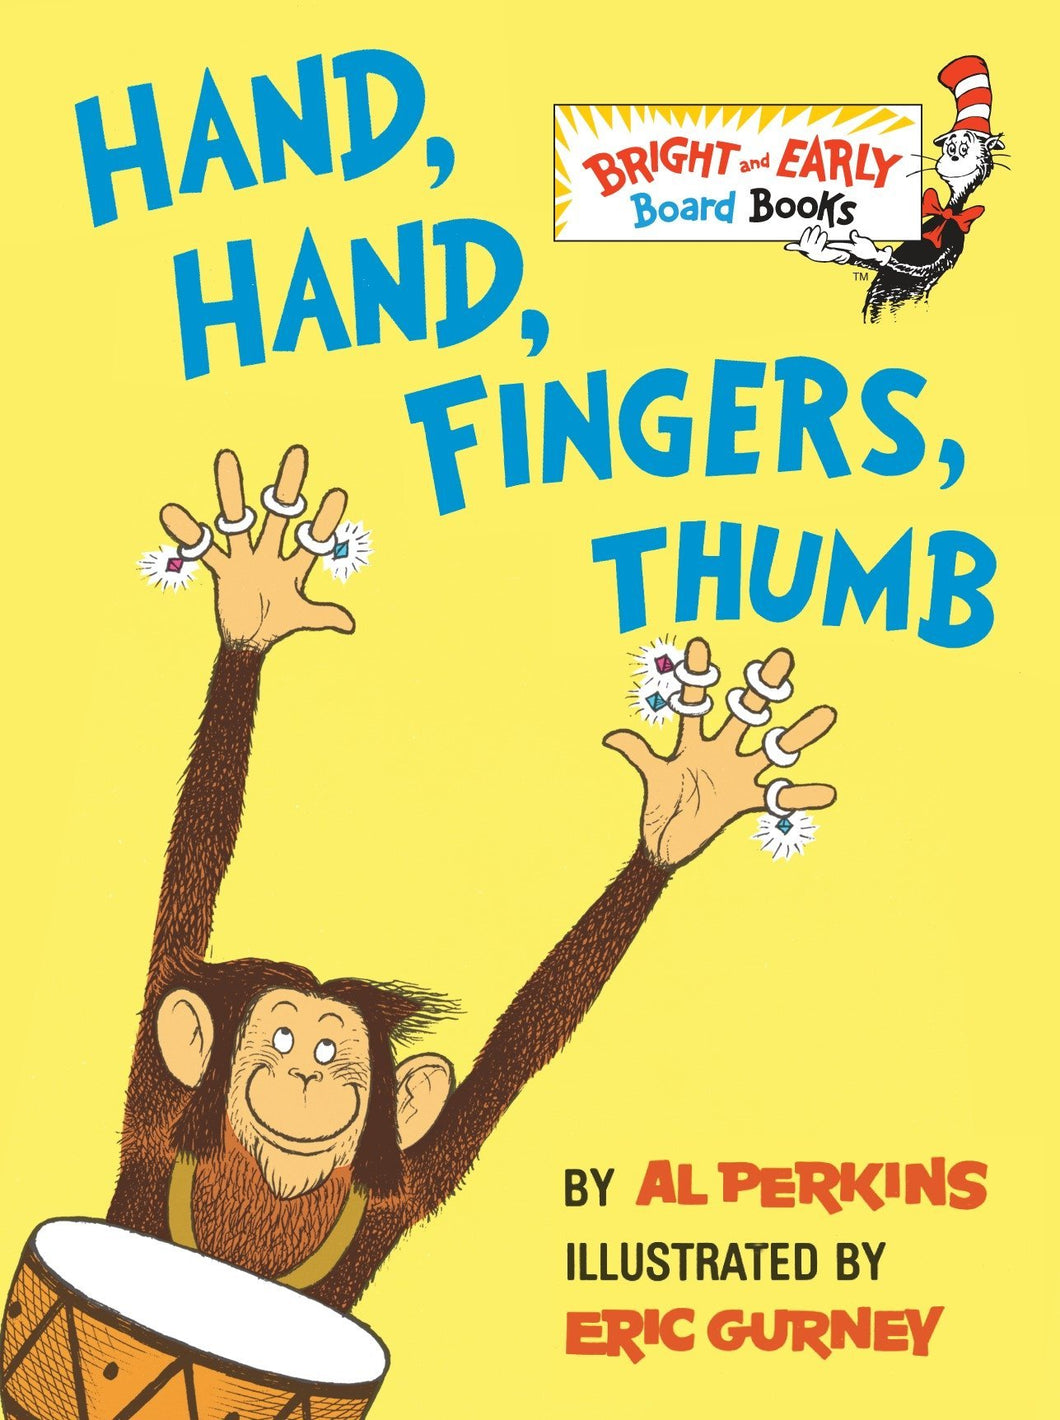 Hand, Hand, Fingers, Thumb (Board Book)